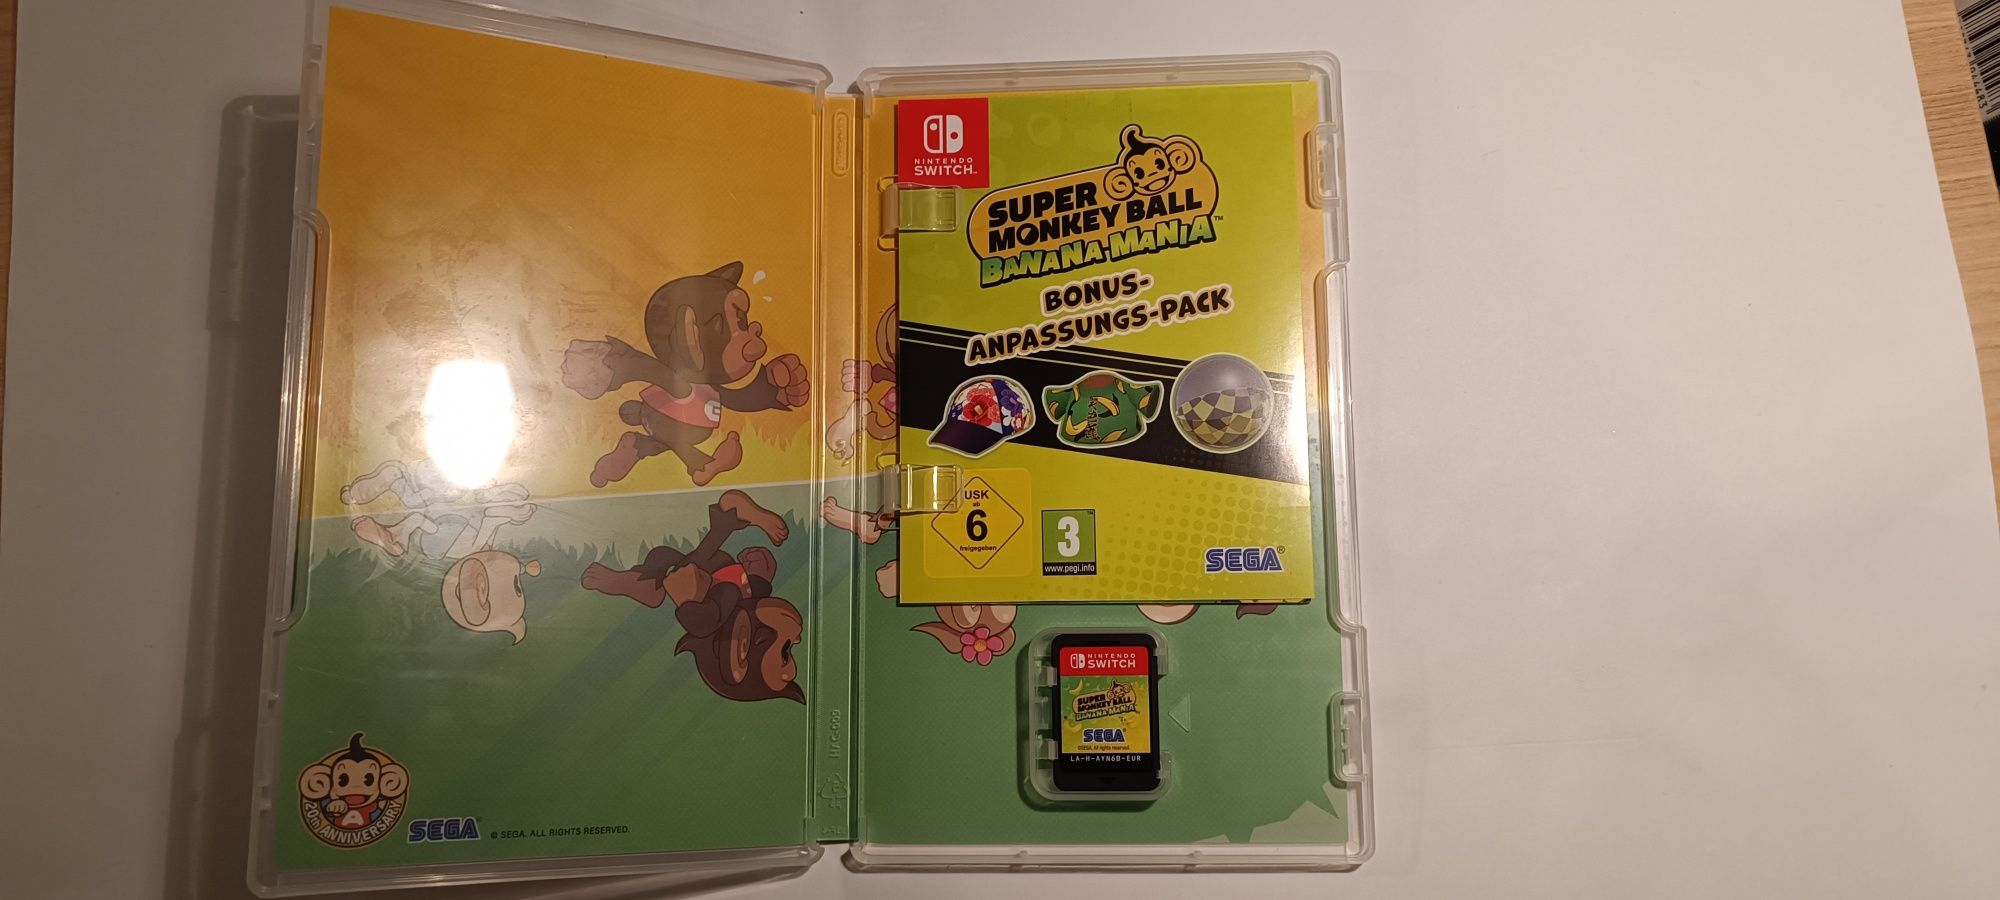 Super monkey ball banana mania Nintendo switch